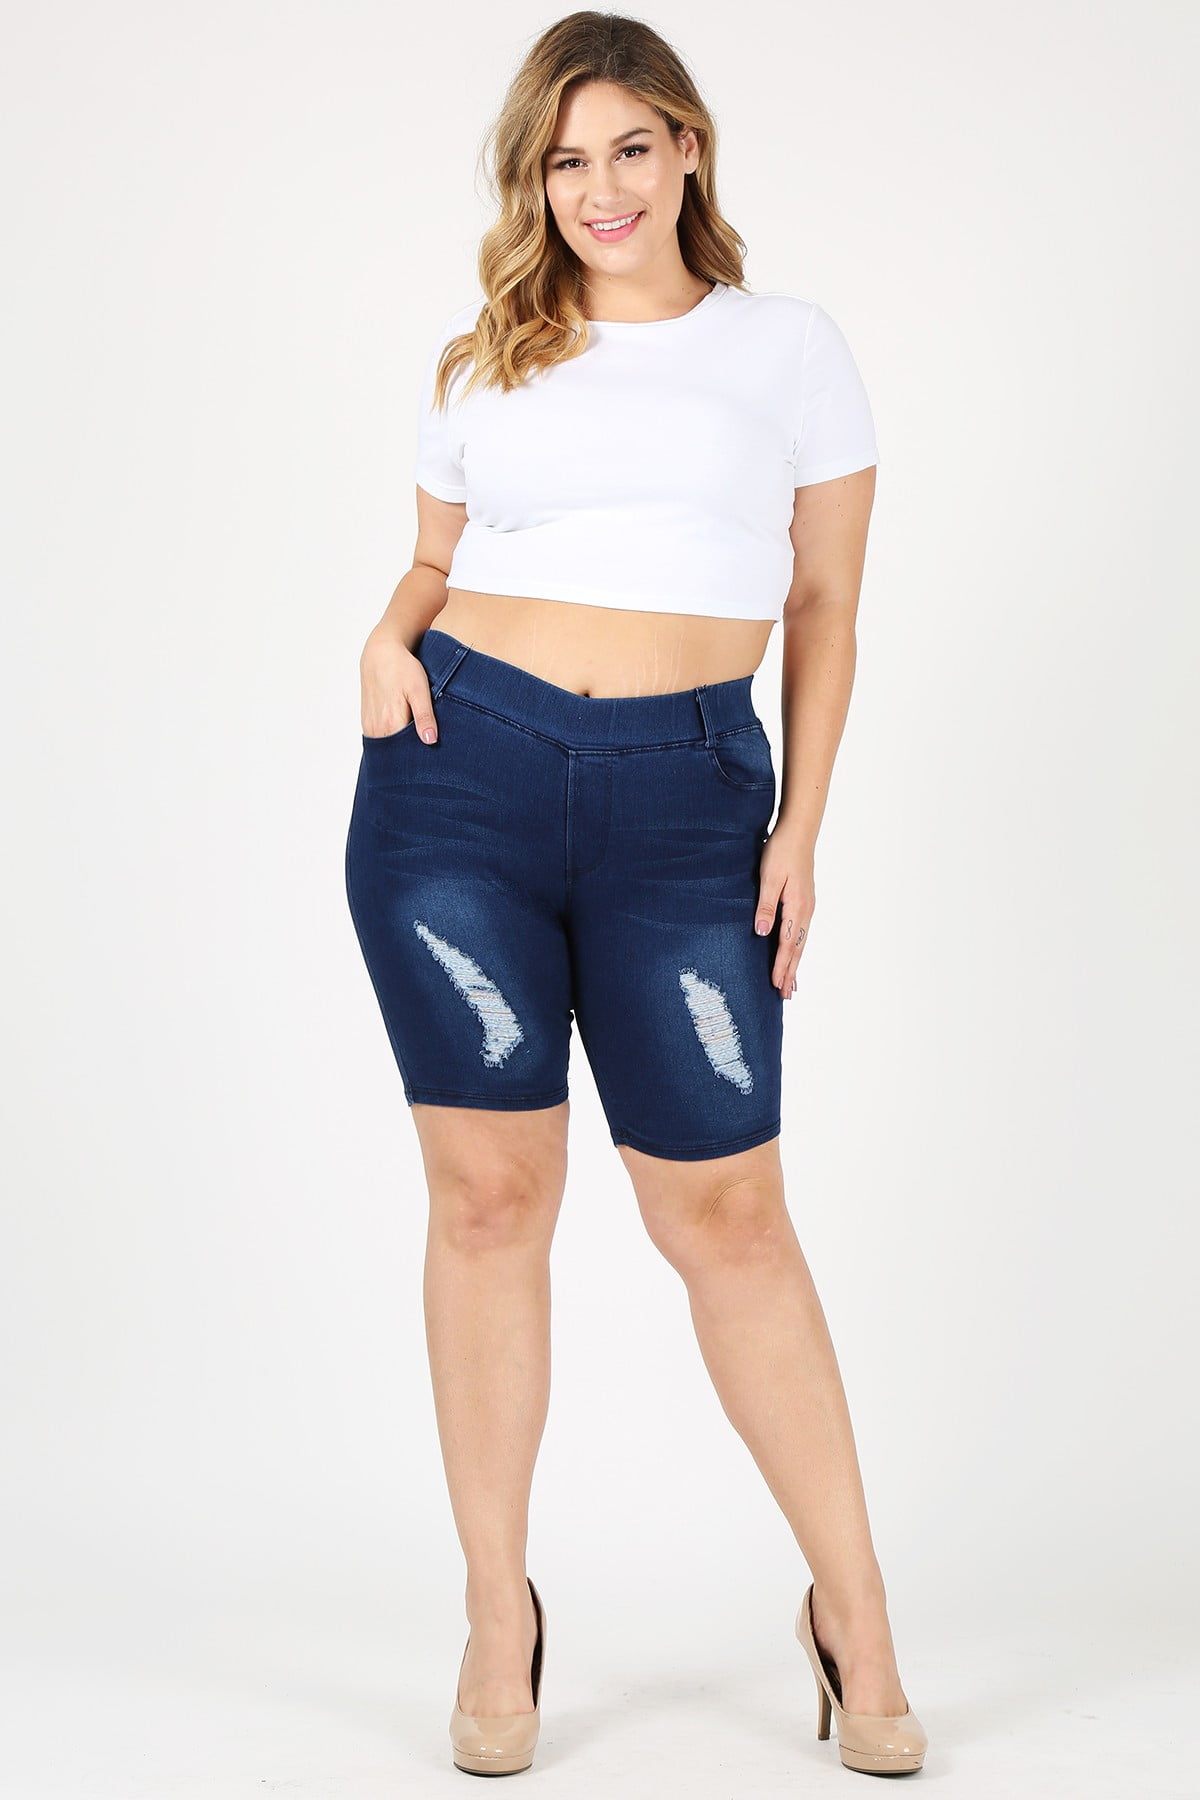 Pervobs Womens High Waist Pull-On Skinny Super Comfy Capris Jegging & Bermuda Shorts Plus Size